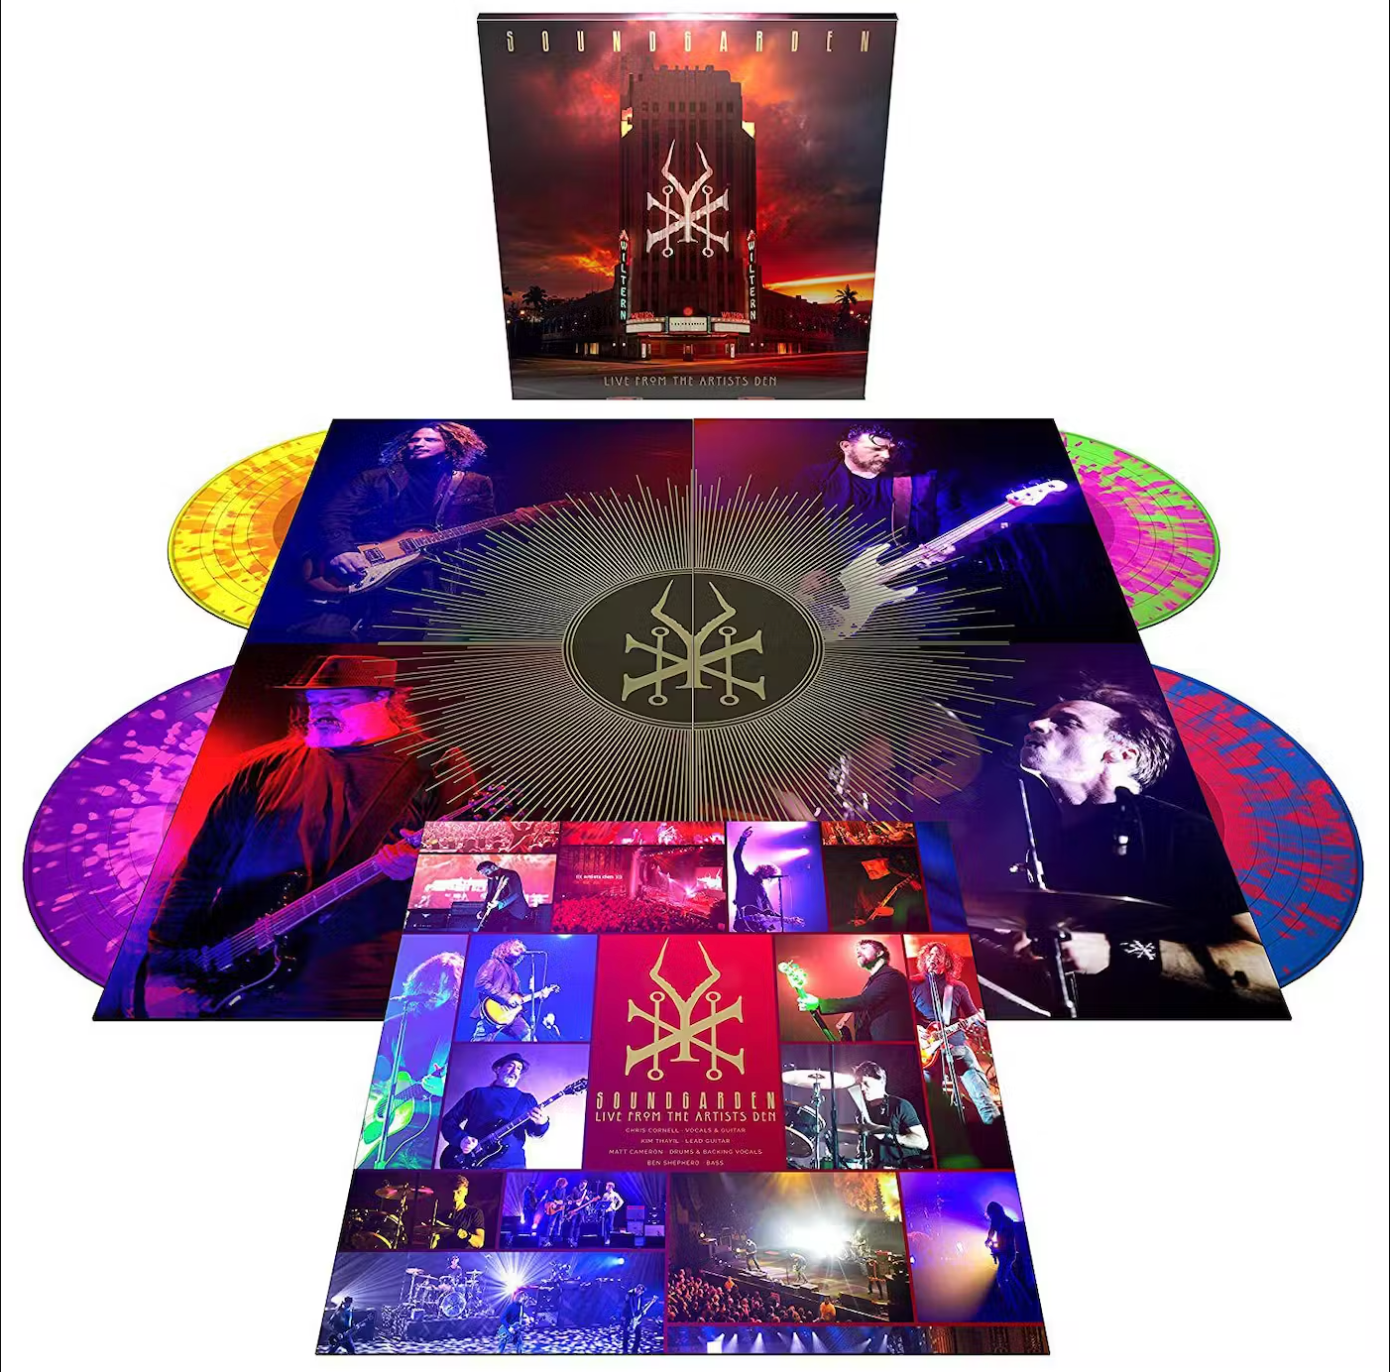 Soundgarden - Live From The Artist's Den (Deluxe Boxset)